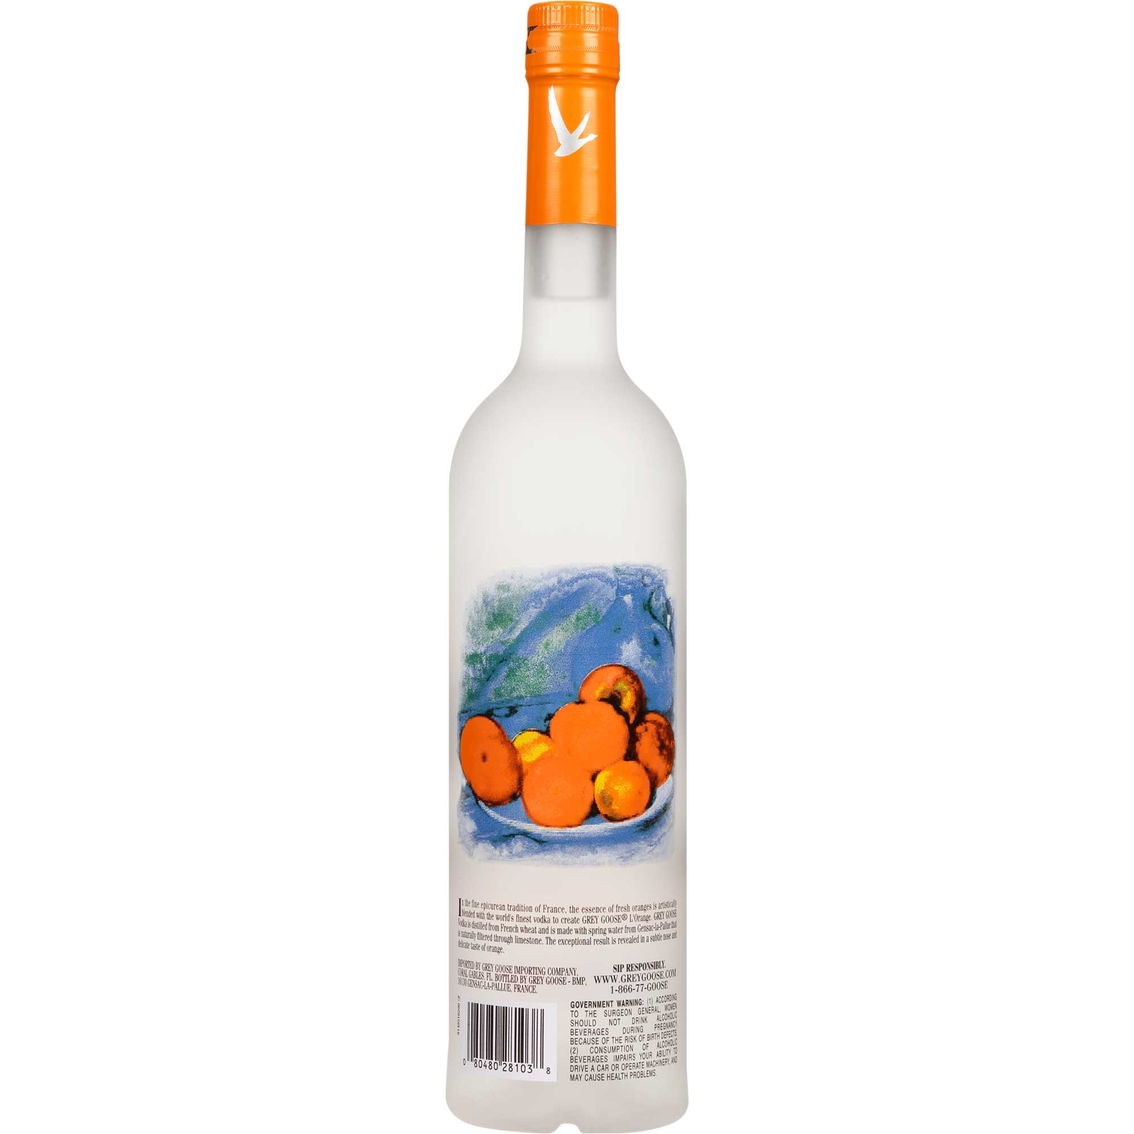 Grey Goose L'Orange Vodka 750ml - Image 2 of 2